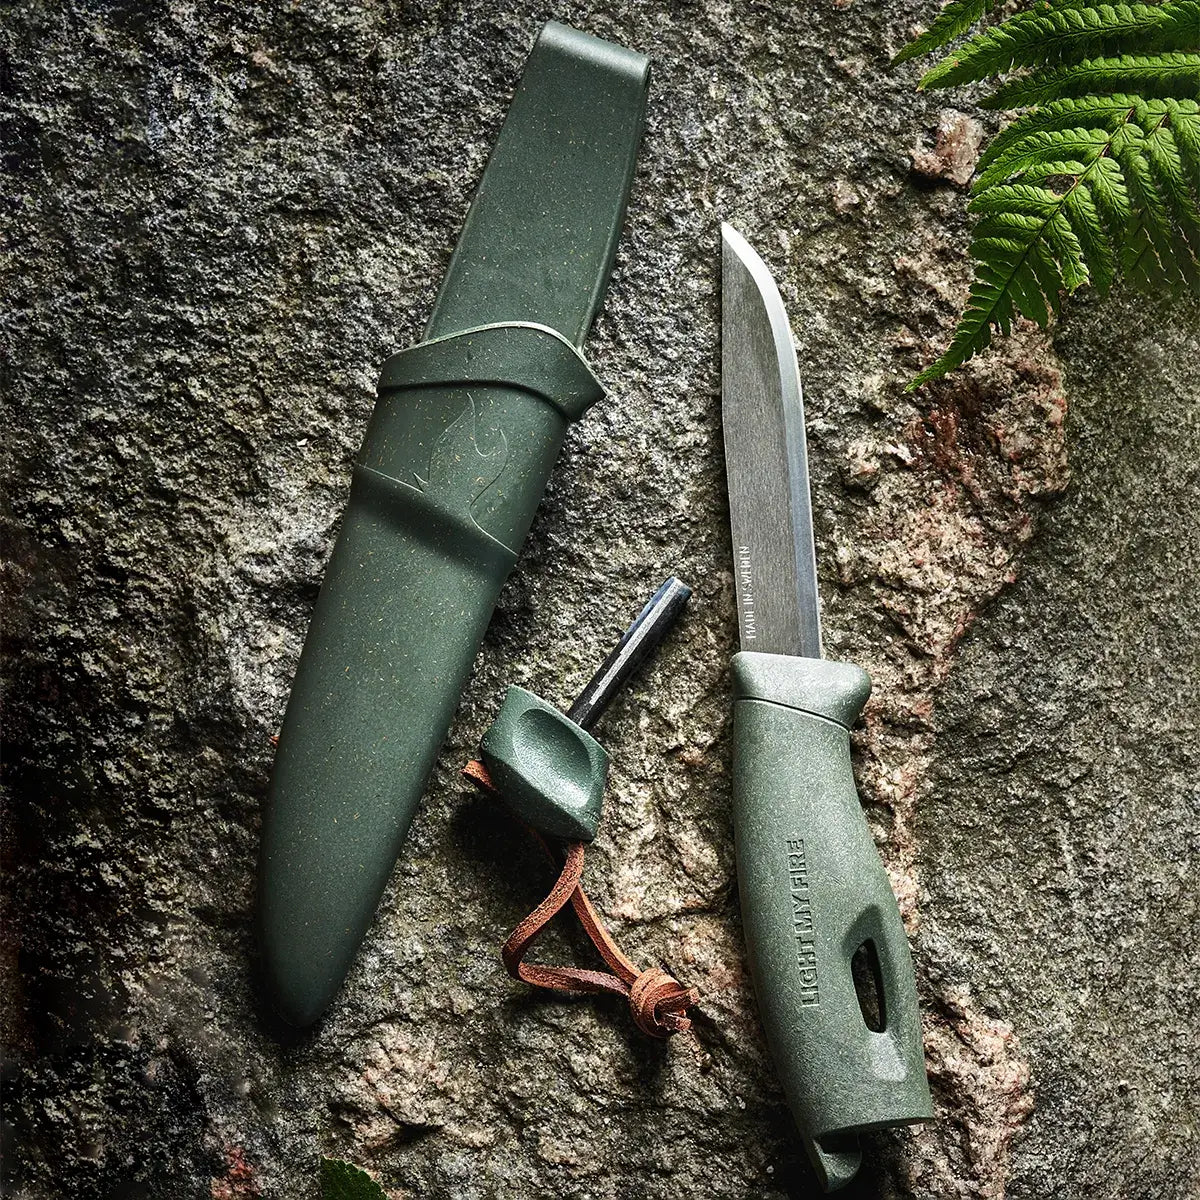 Green knife, shath and ferro rod on a rock.